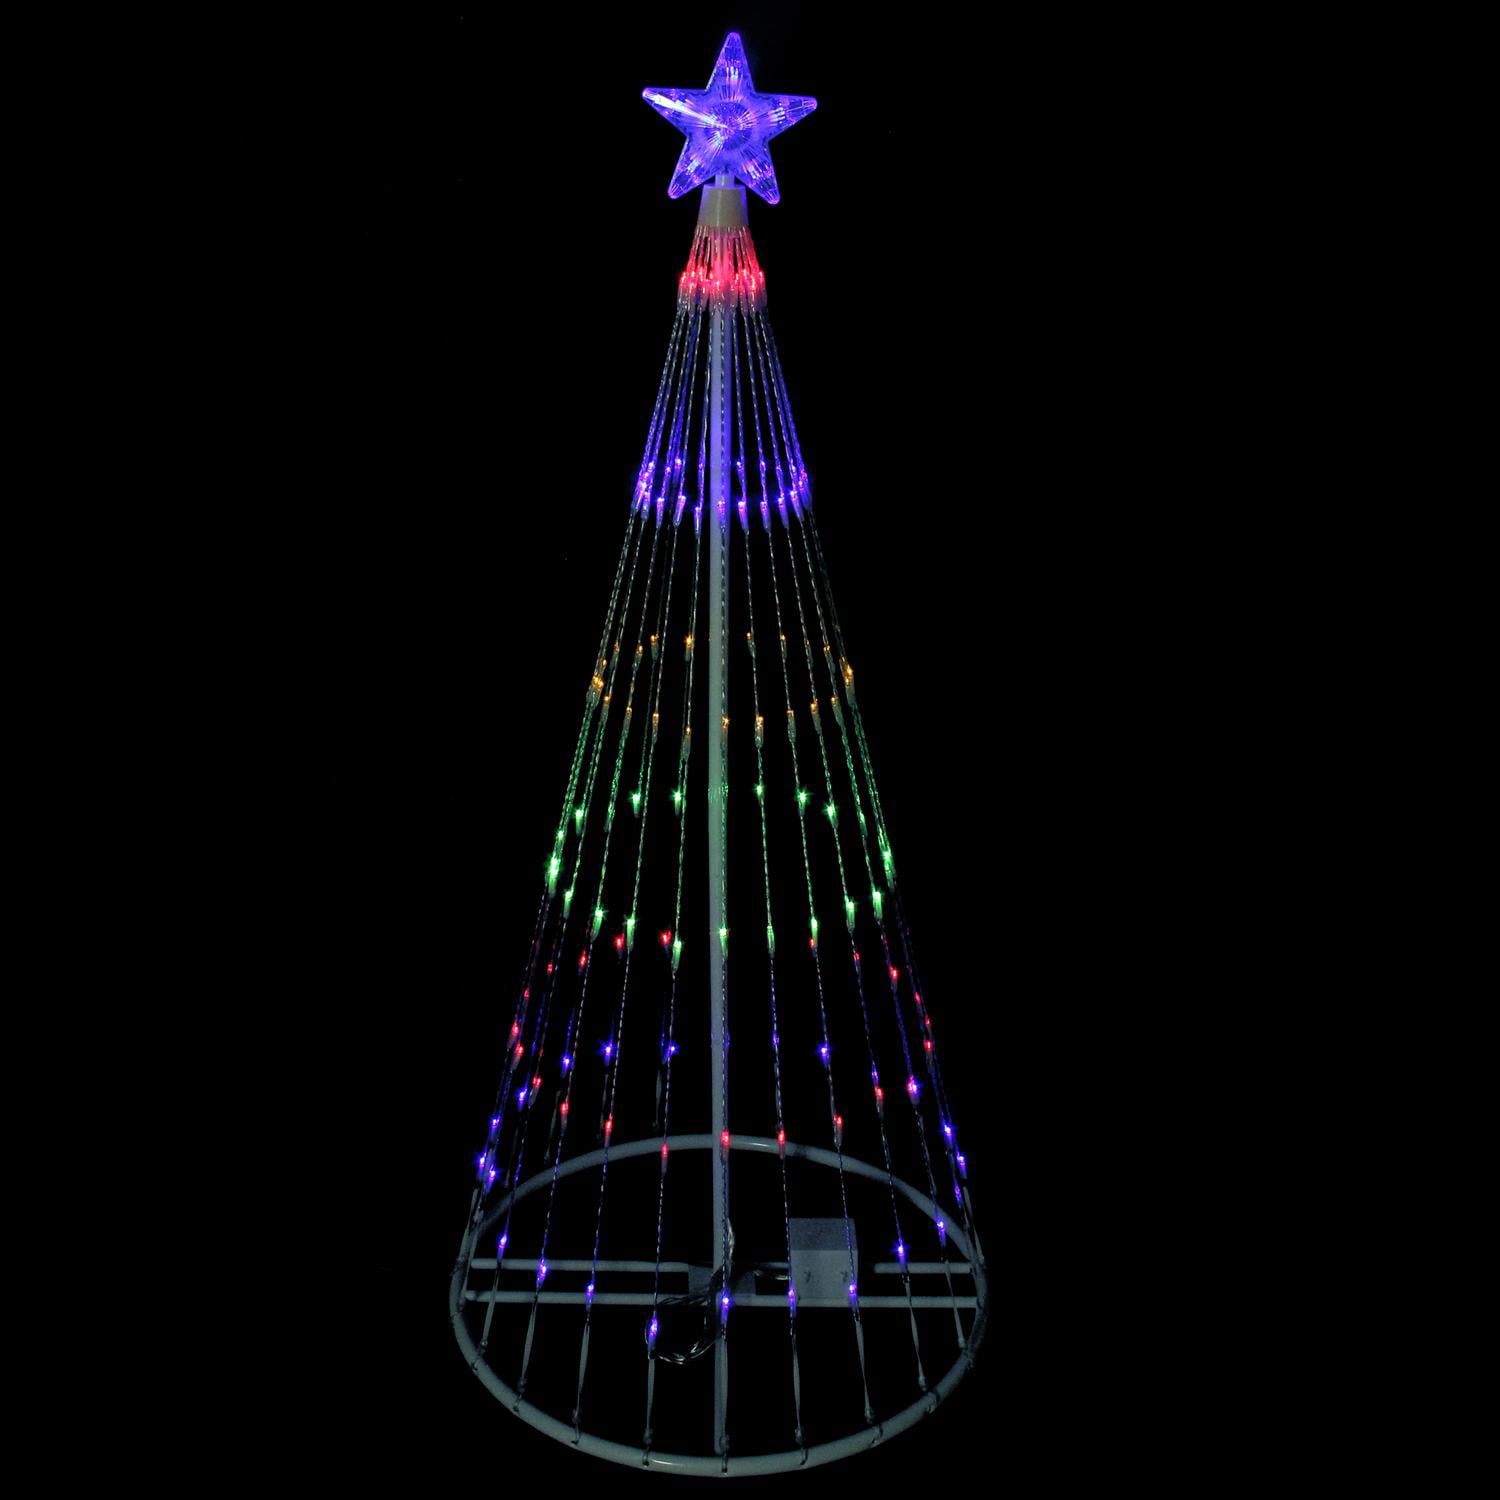 LED Light Show Cone 4 Ft. Multi Color Christmas Tree Lighted Yard Art Decoration | eBay